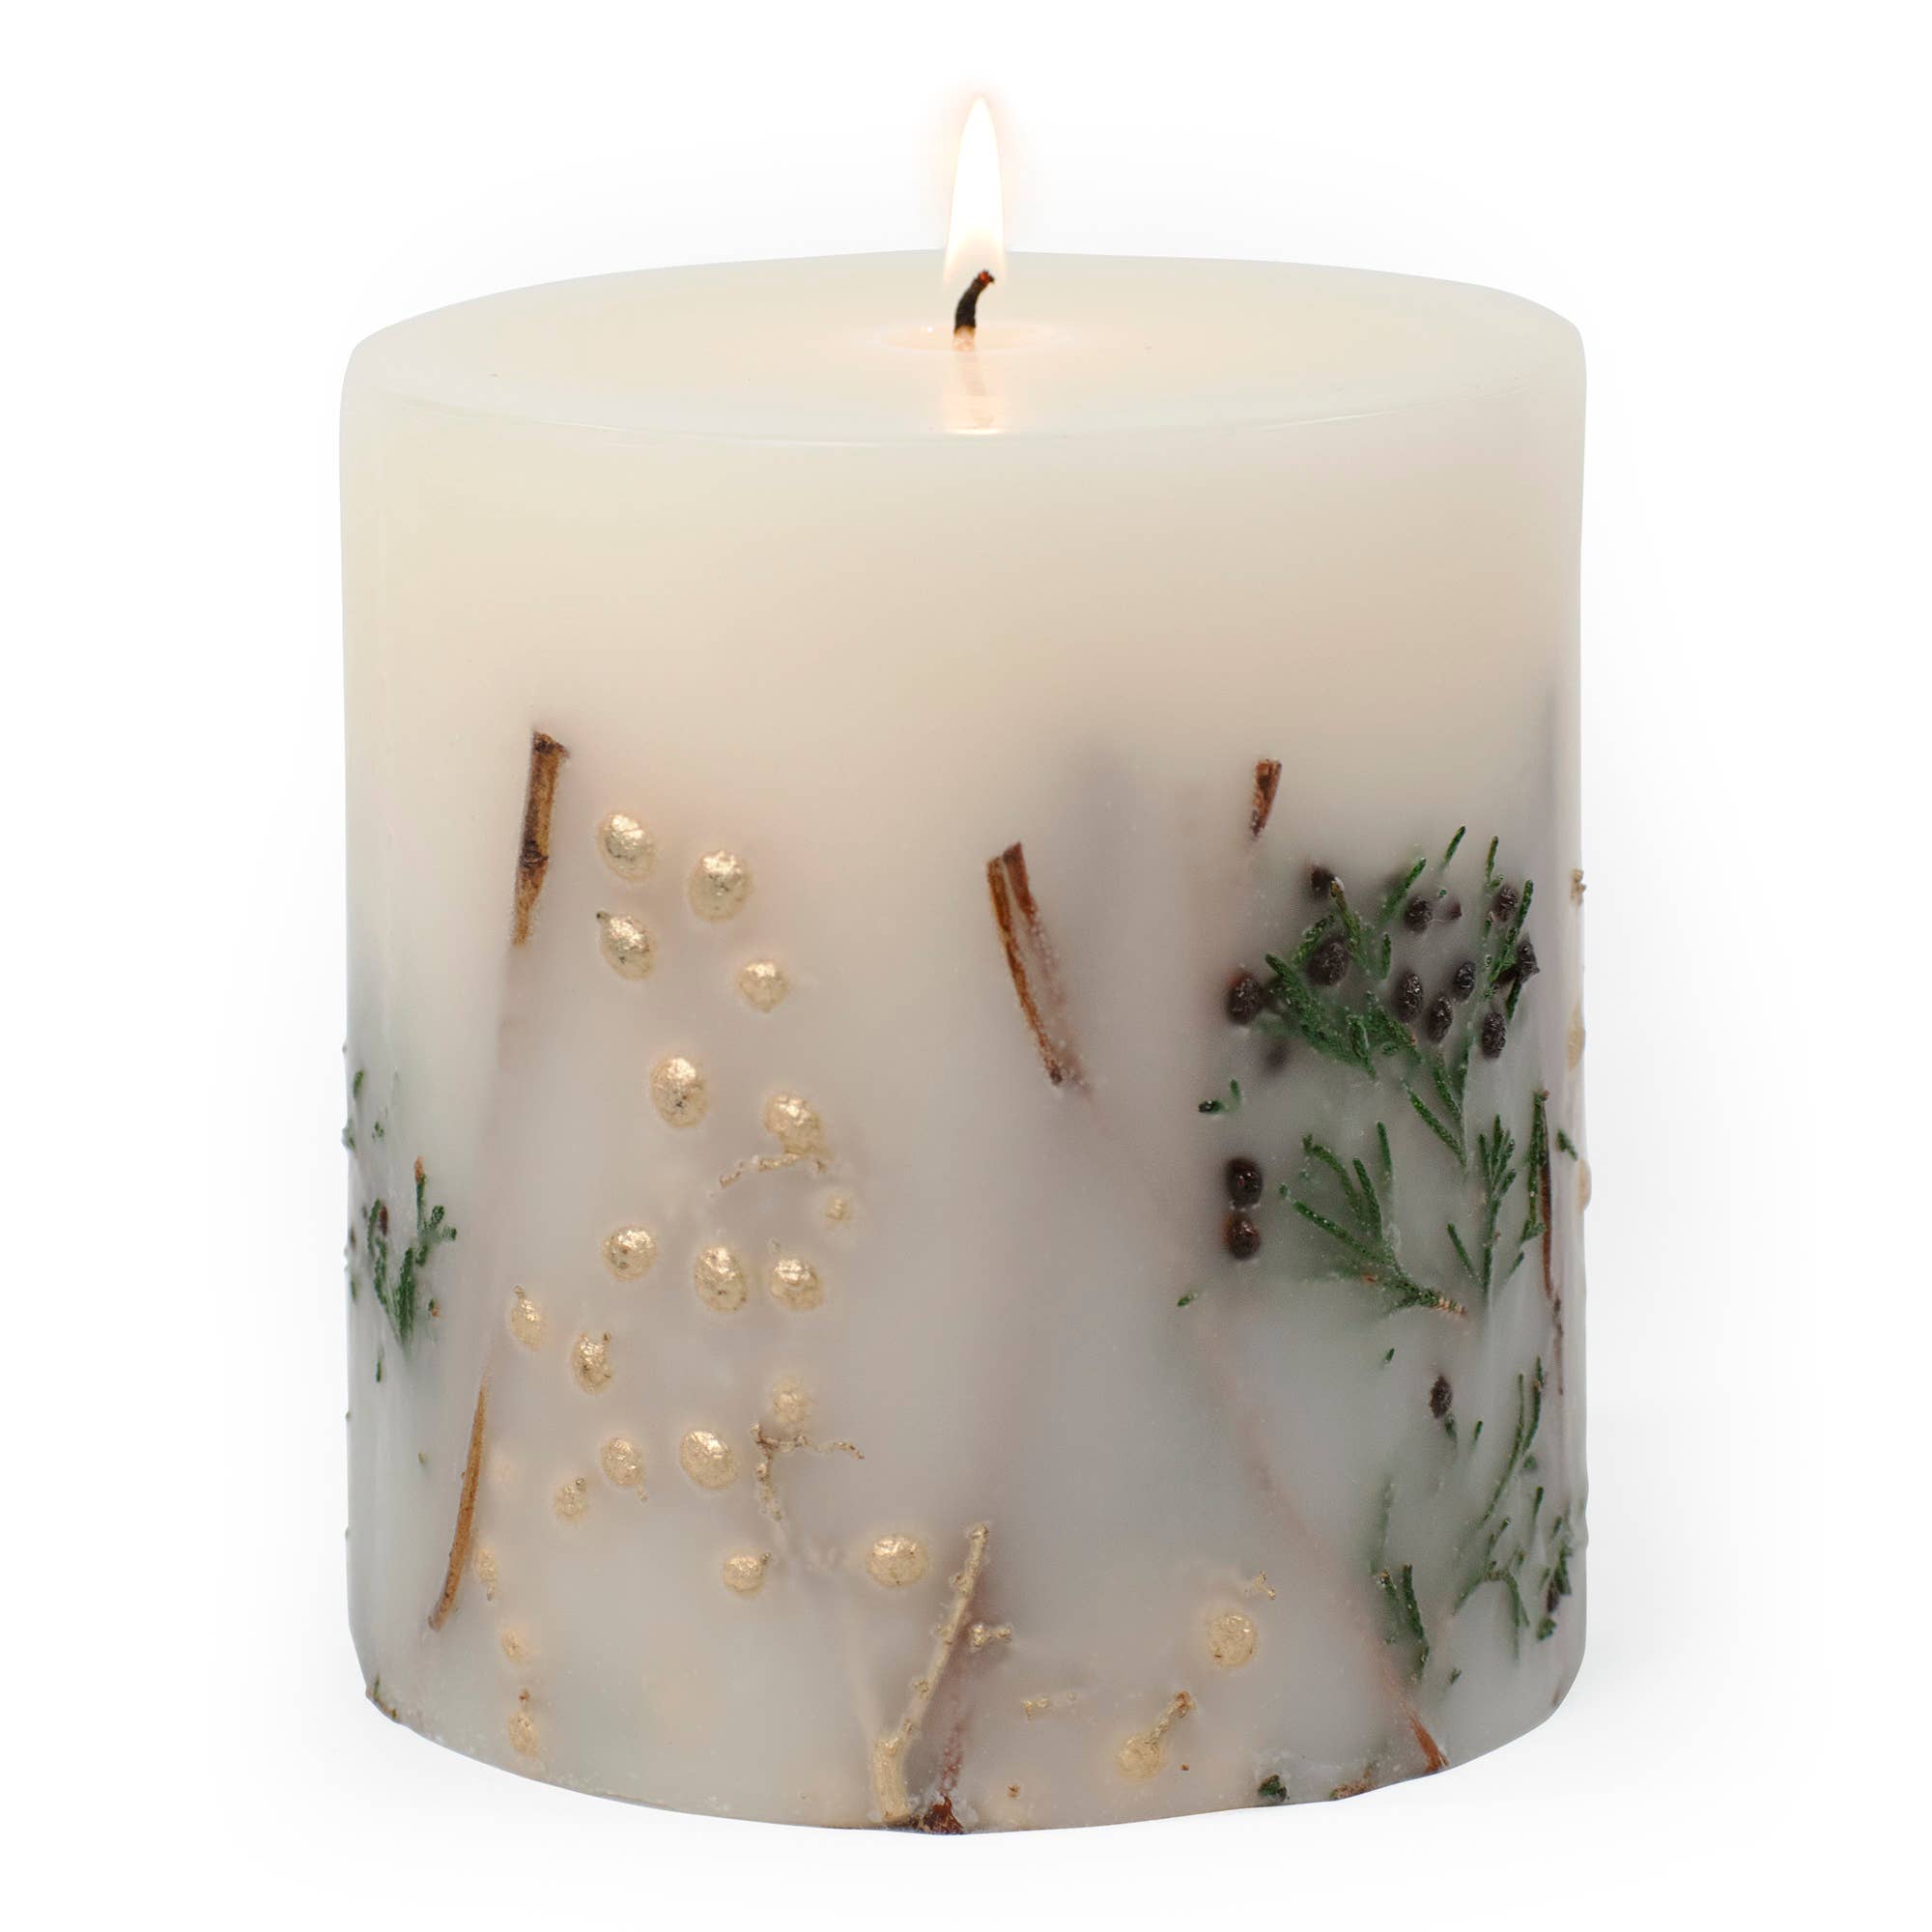 Evergreen Pine Botanical Pillar Candle